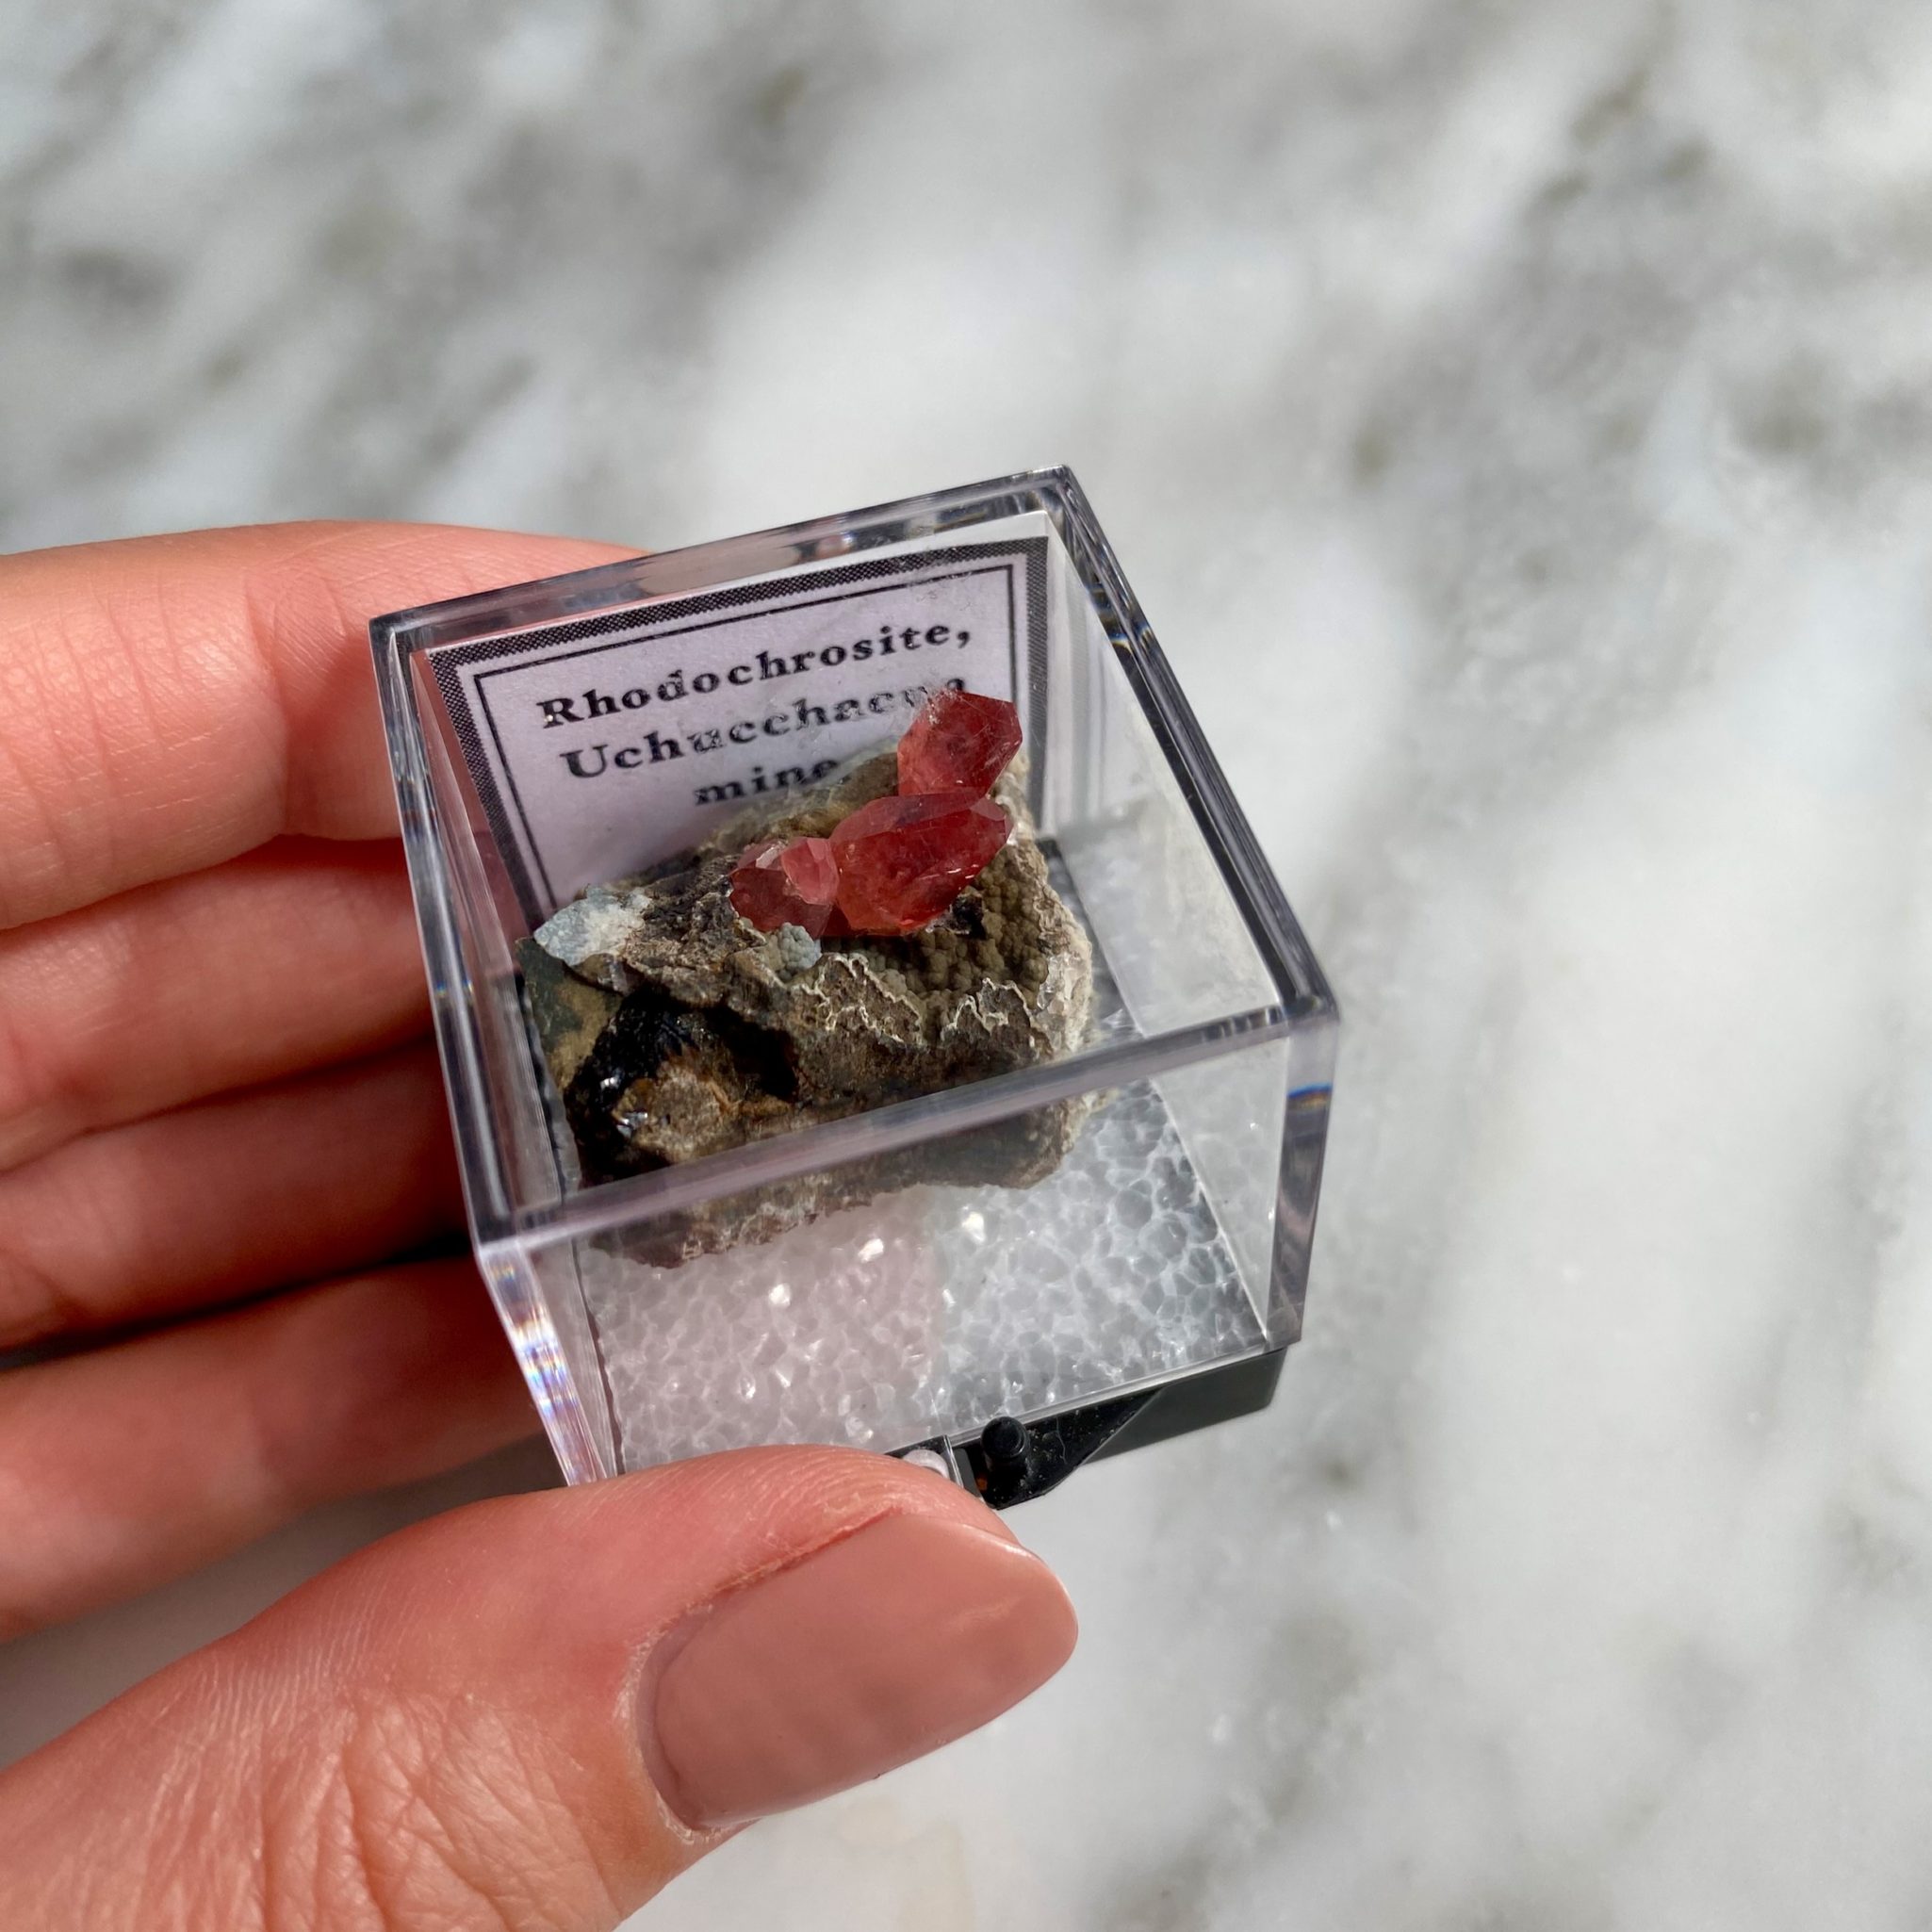 Red Garnet Tumbled Pocket Stone - Minera Emporium Crystal & Mineral Shop